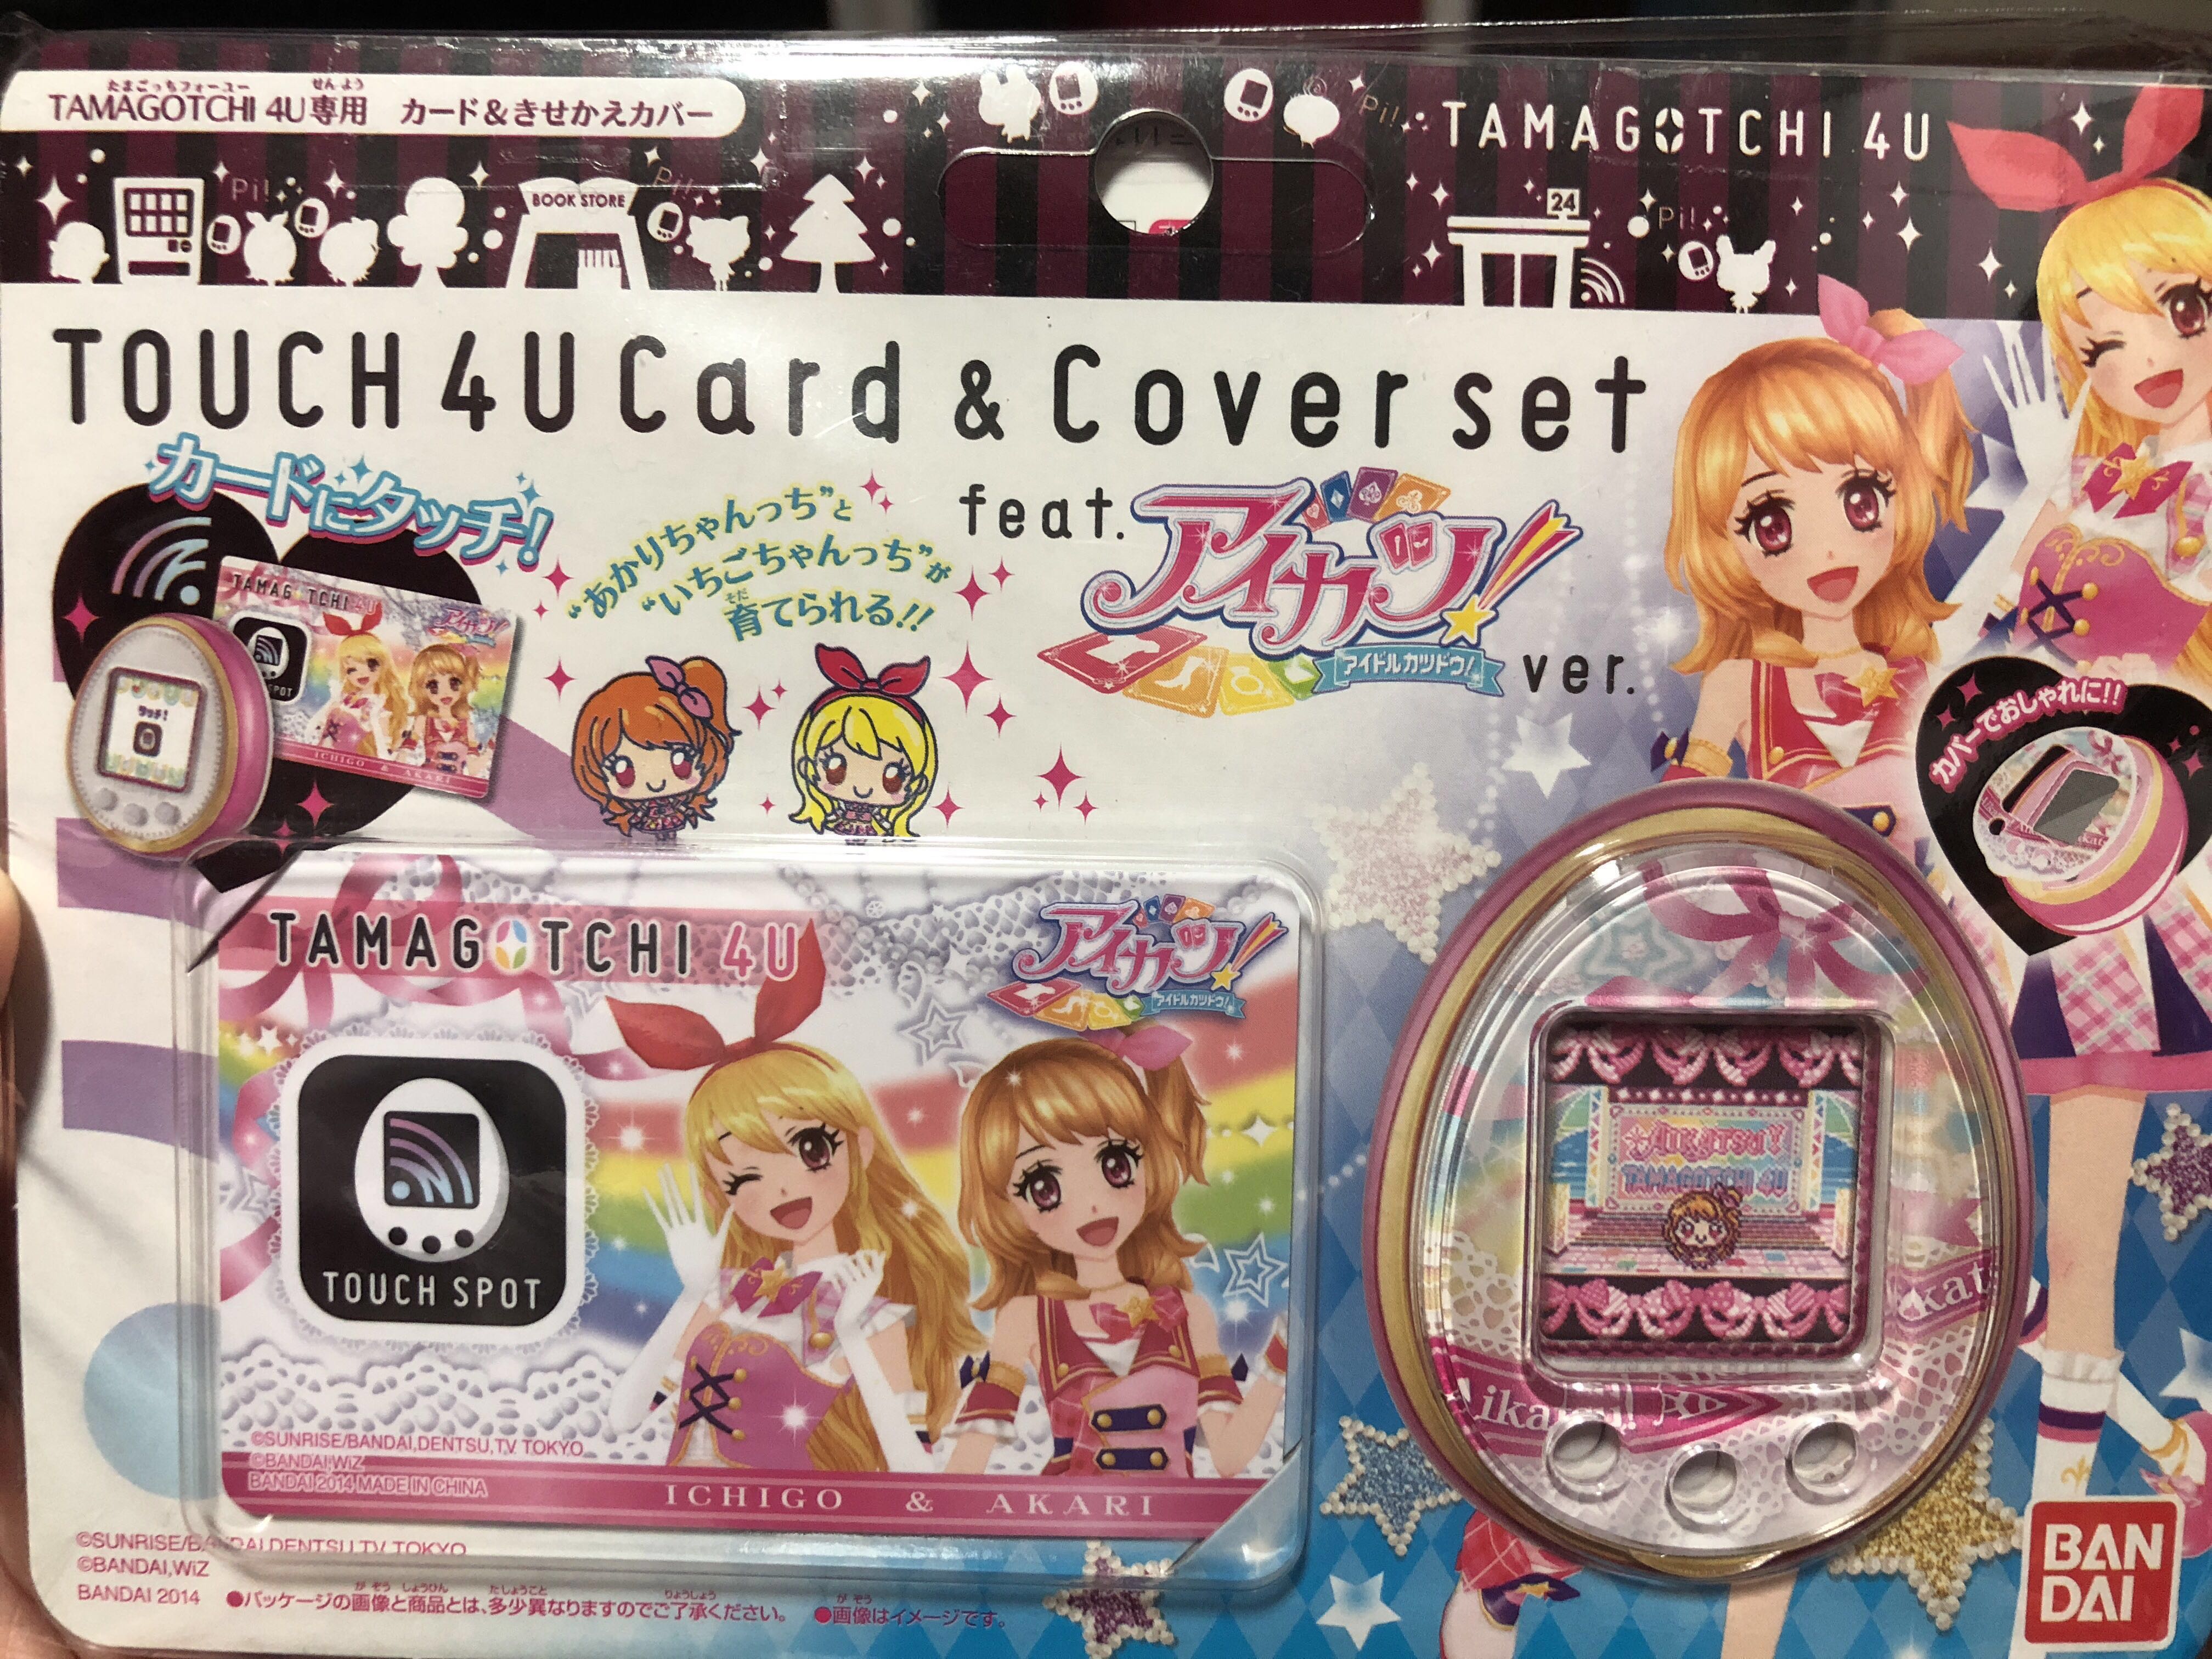 New Bandai Tamagotchi 4u Touch 4U Card & Cover set feat Japan Aikatsu 